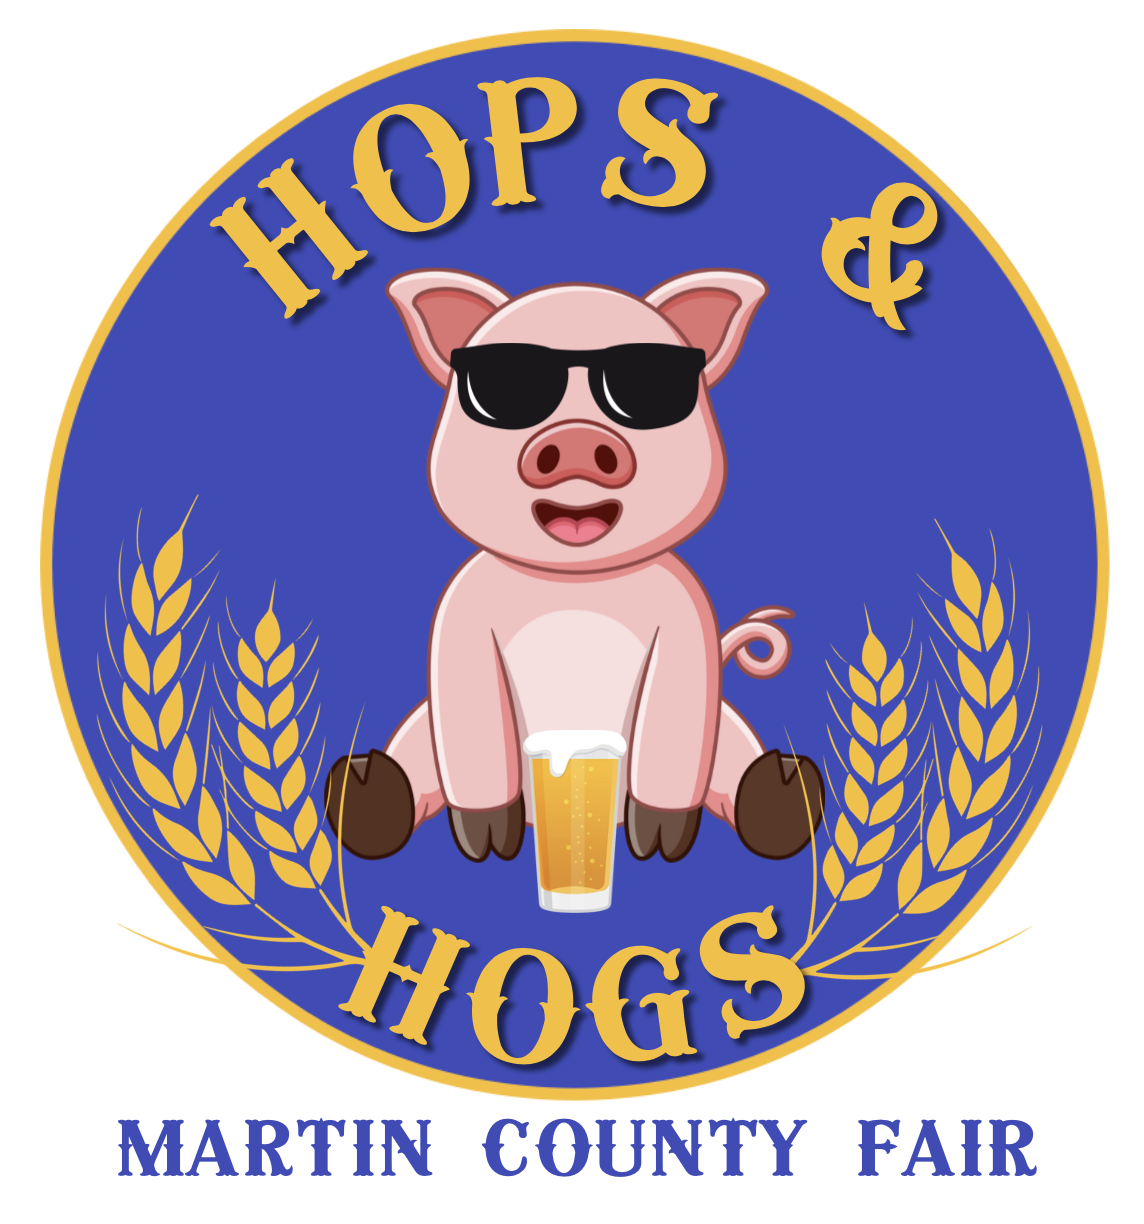 Hops and Hogs logo